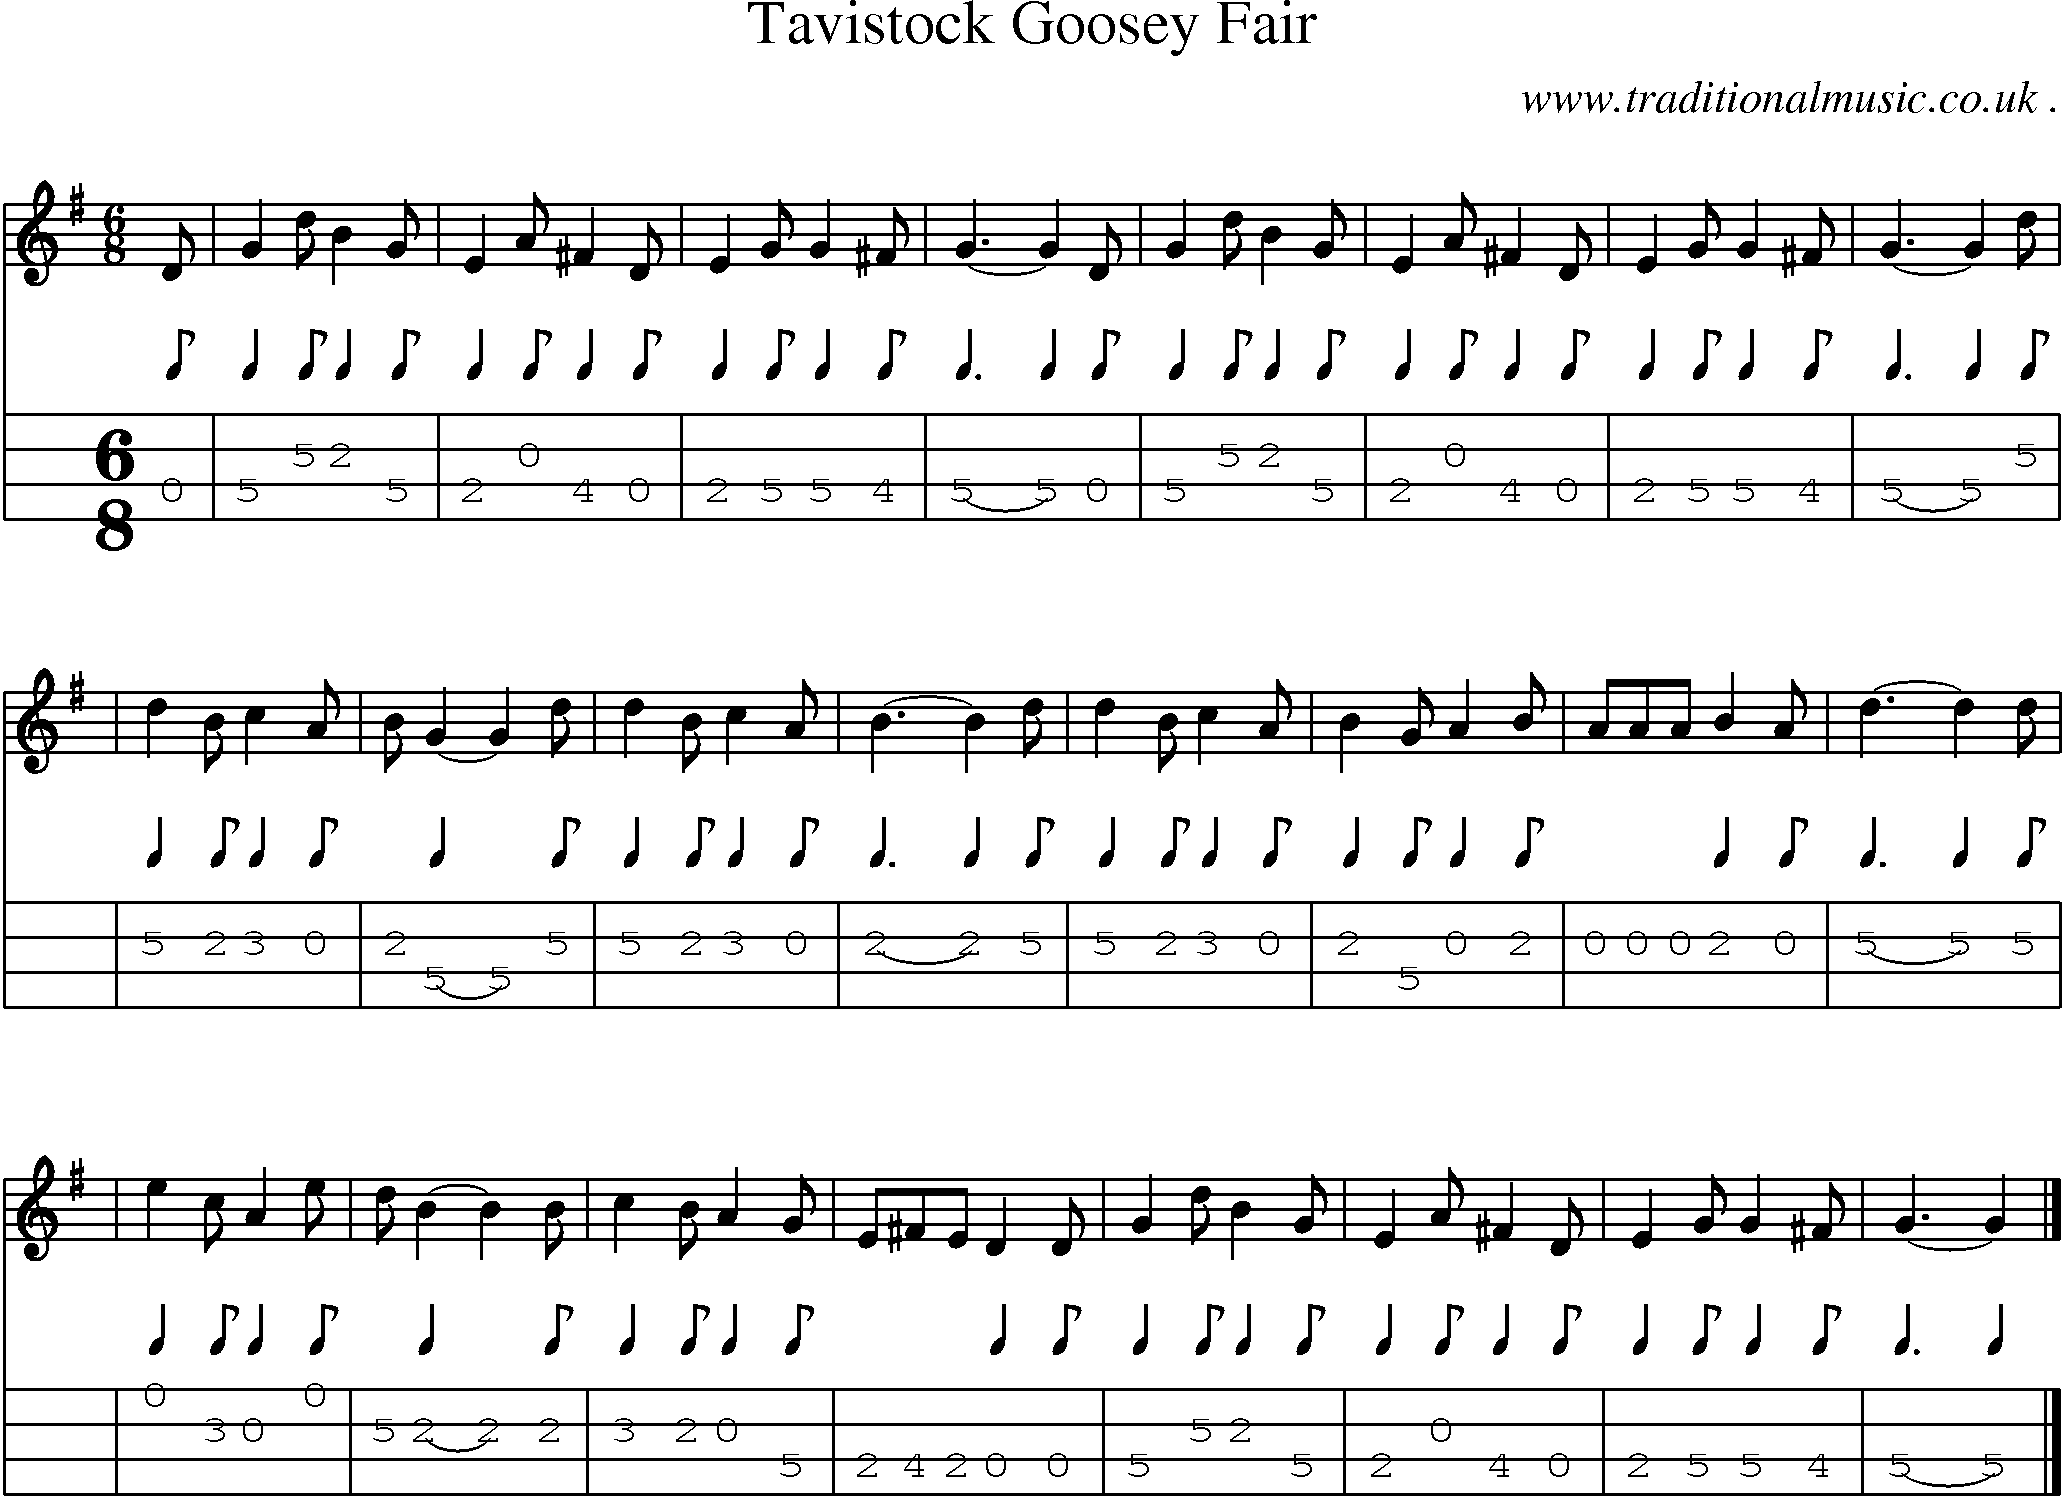 Sheet-music  score, Chords and Mandolin Tabs for Tavistock Goosey Fair